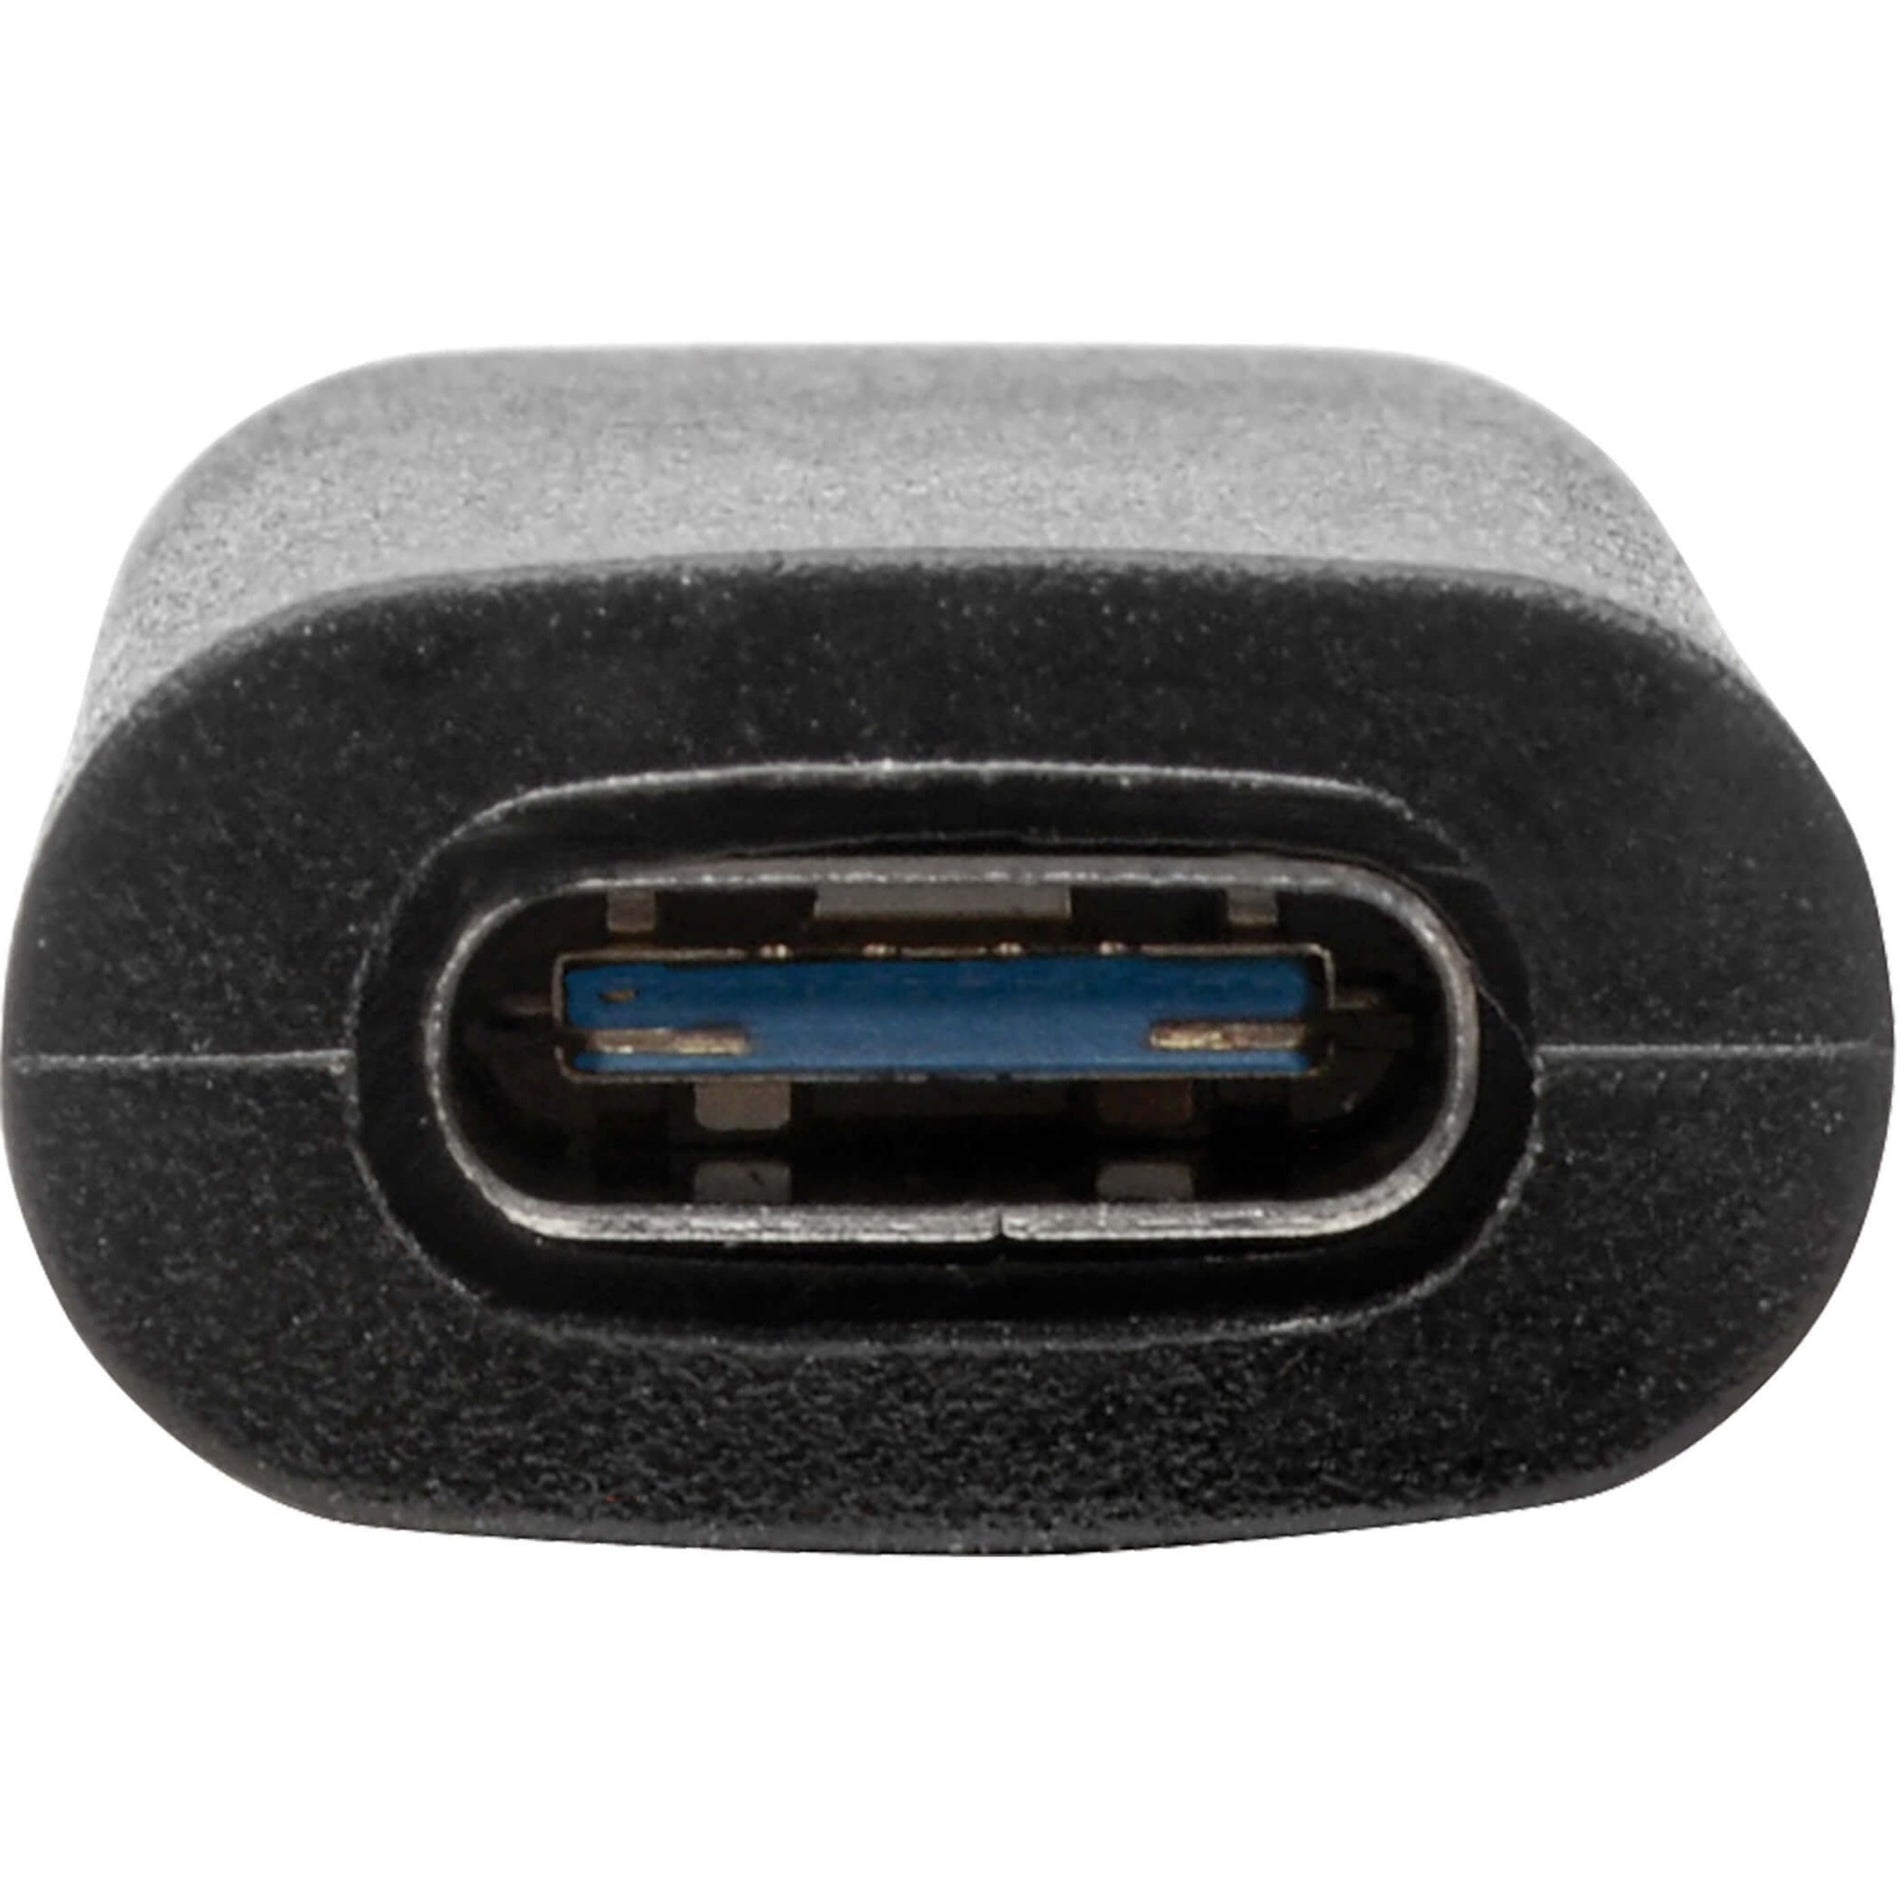 Tripp Lite: トリップライト  U329-000-10G: U329-000-10G  USB-C: USB-C  USB-A: USB-A  Adapter: アダプター  USB: USB  Gen: Gen  Gbps: Gbps  Black: ブラック